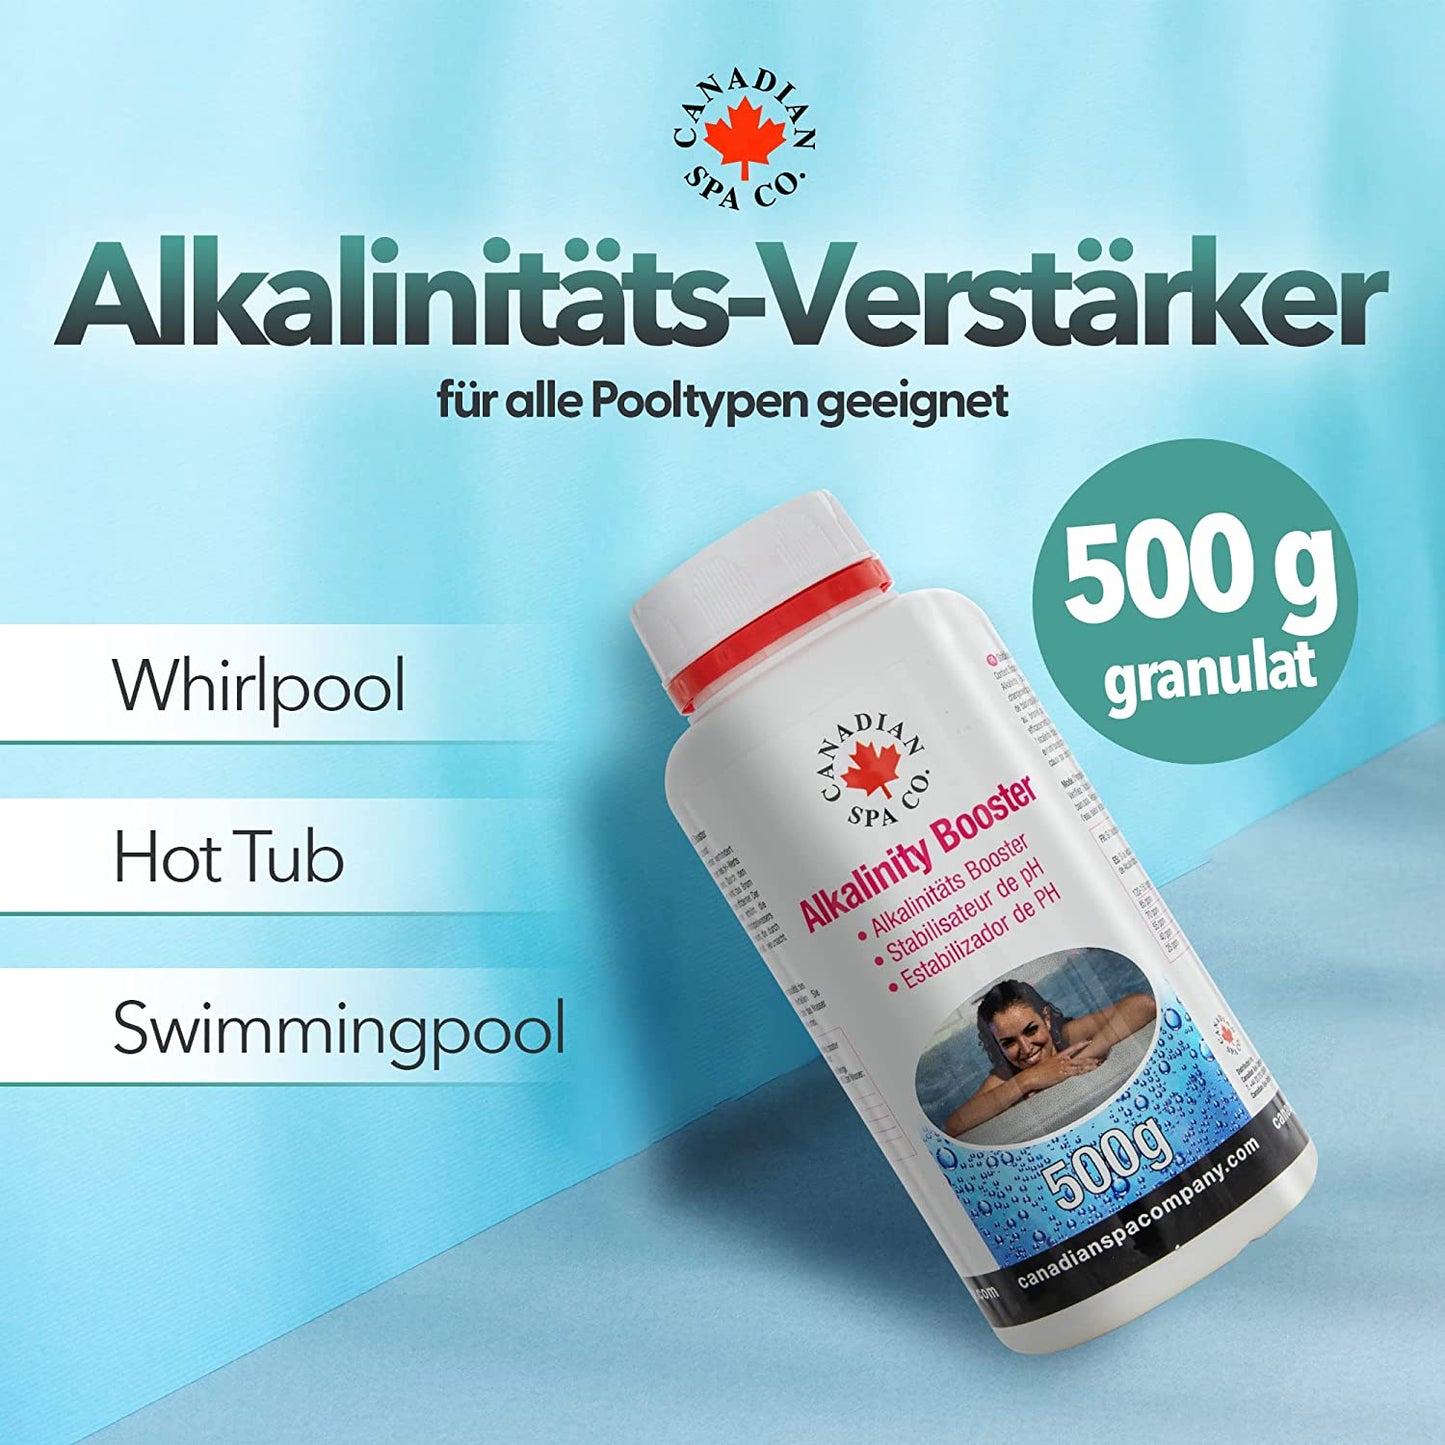 Alkalinitäts-Anpasser / Alkalinity Booster 500g